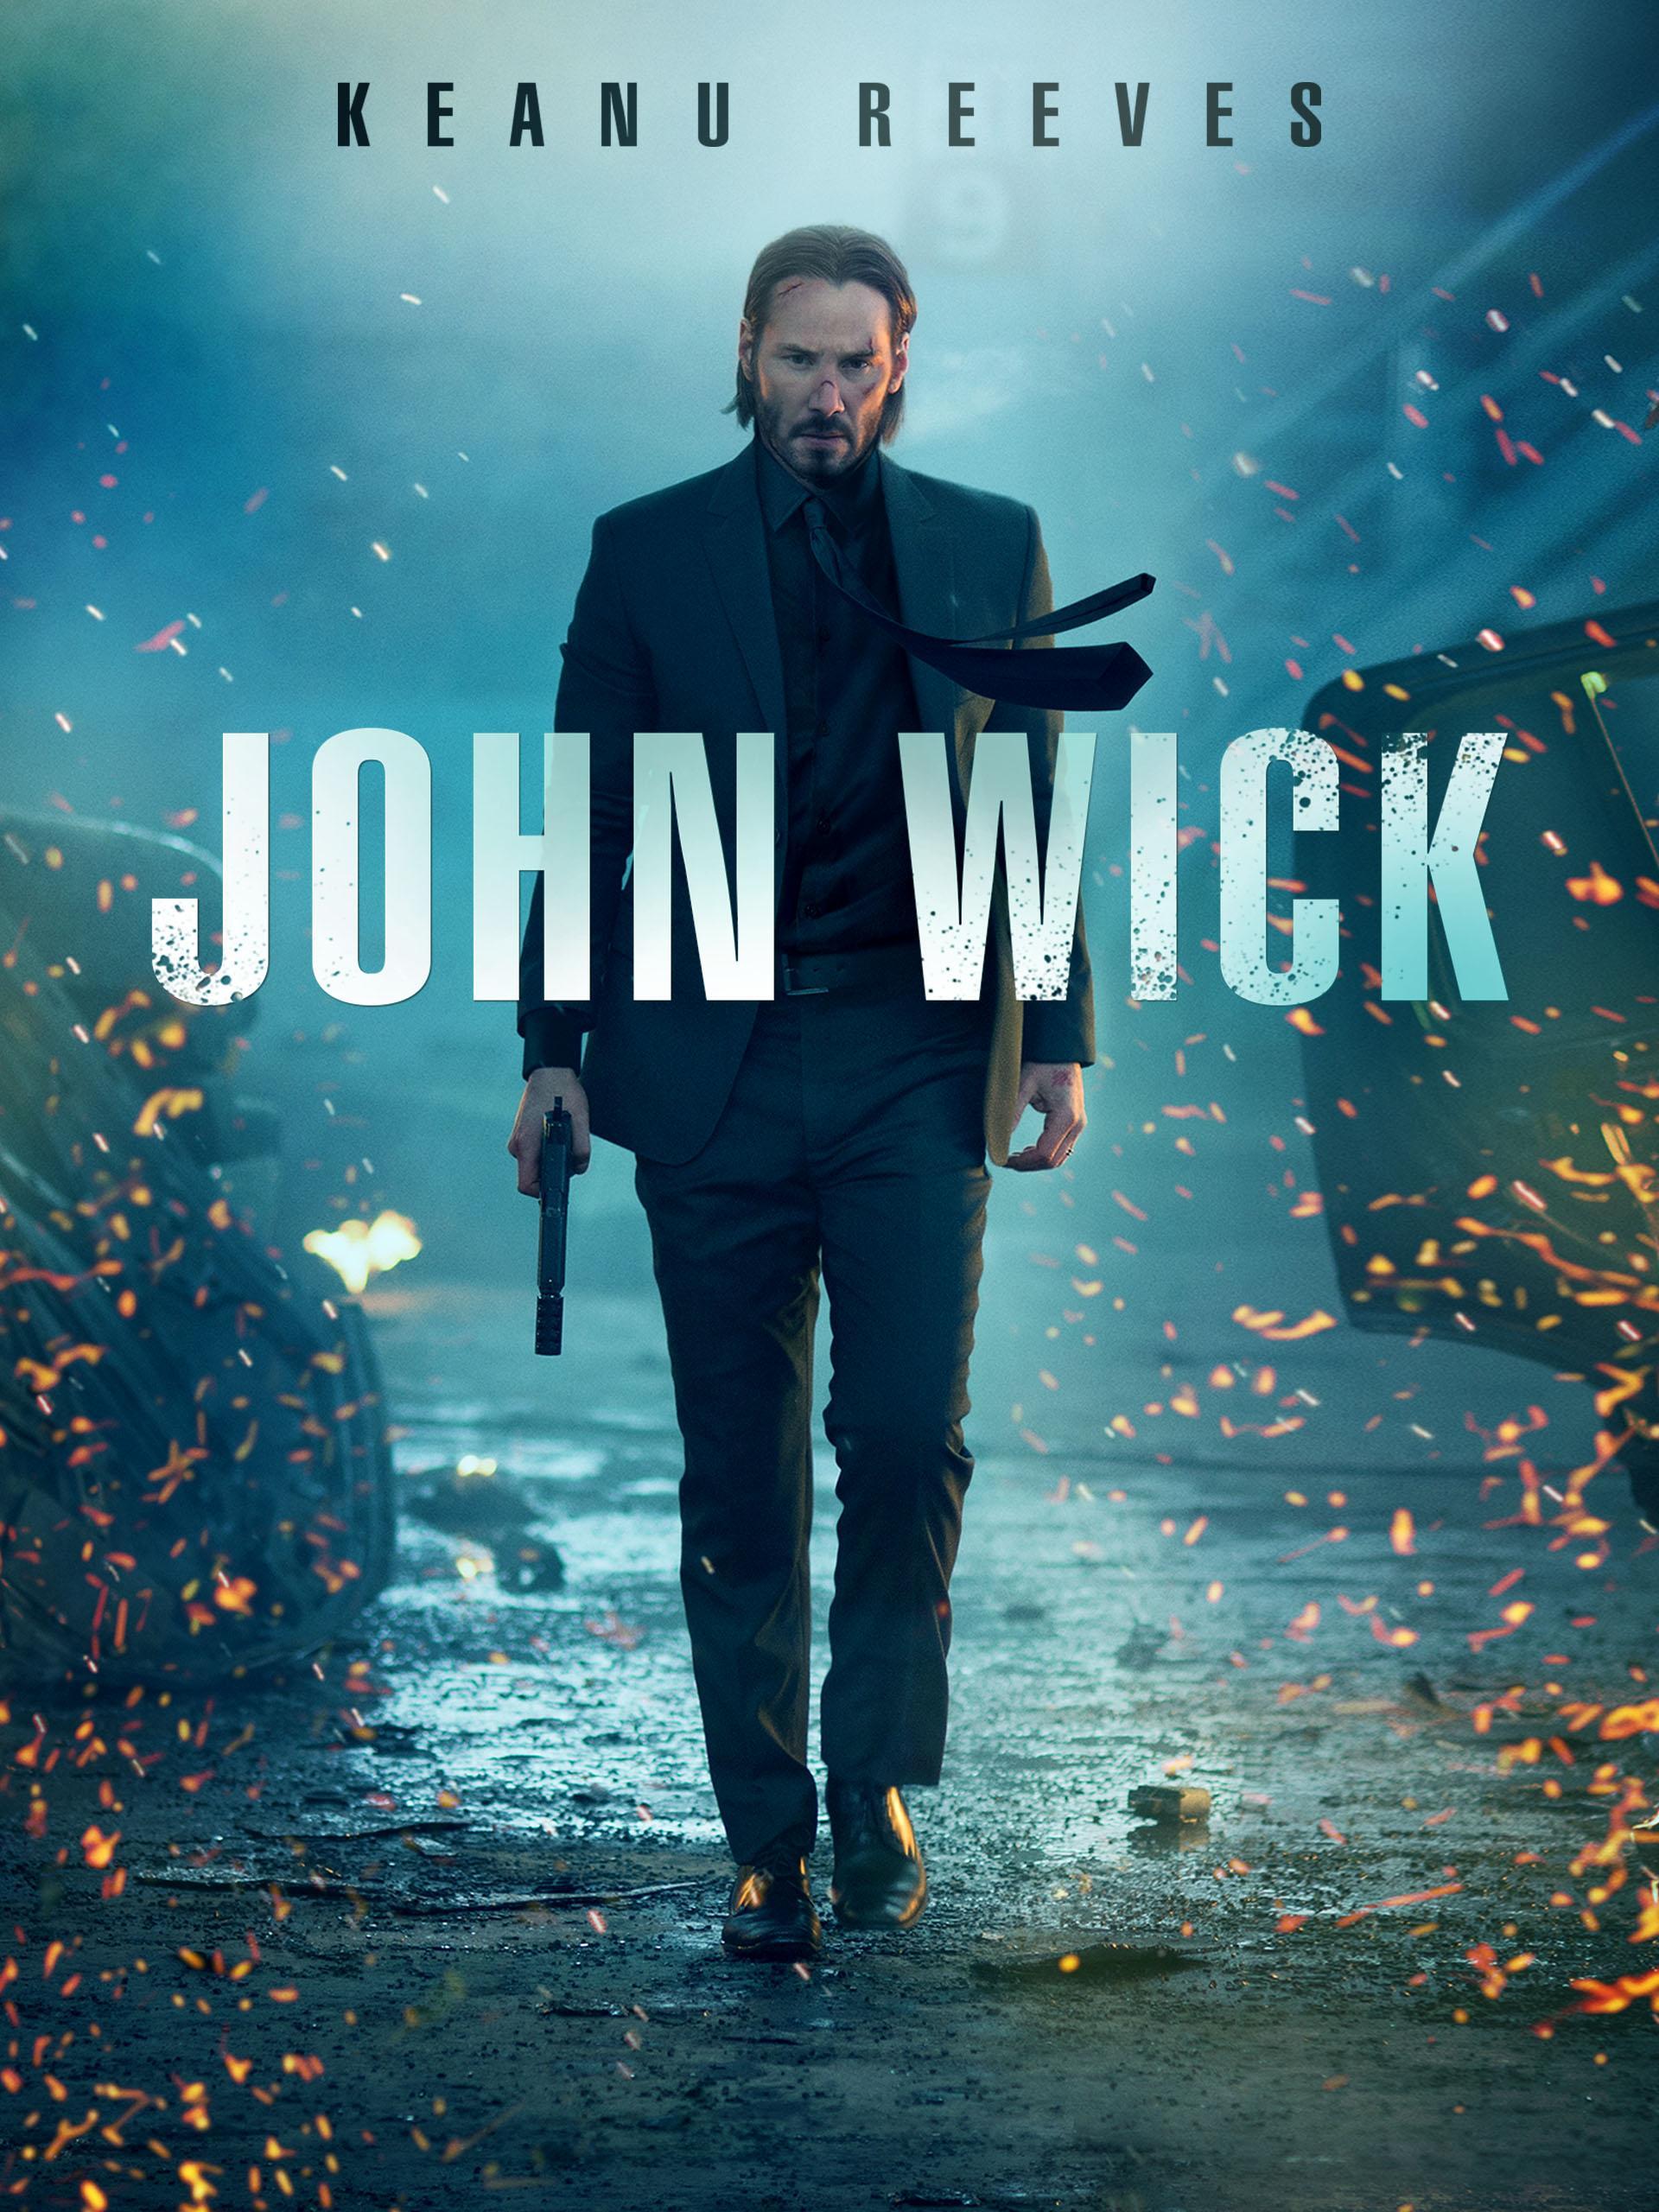 John Wick 2 Officially Announced